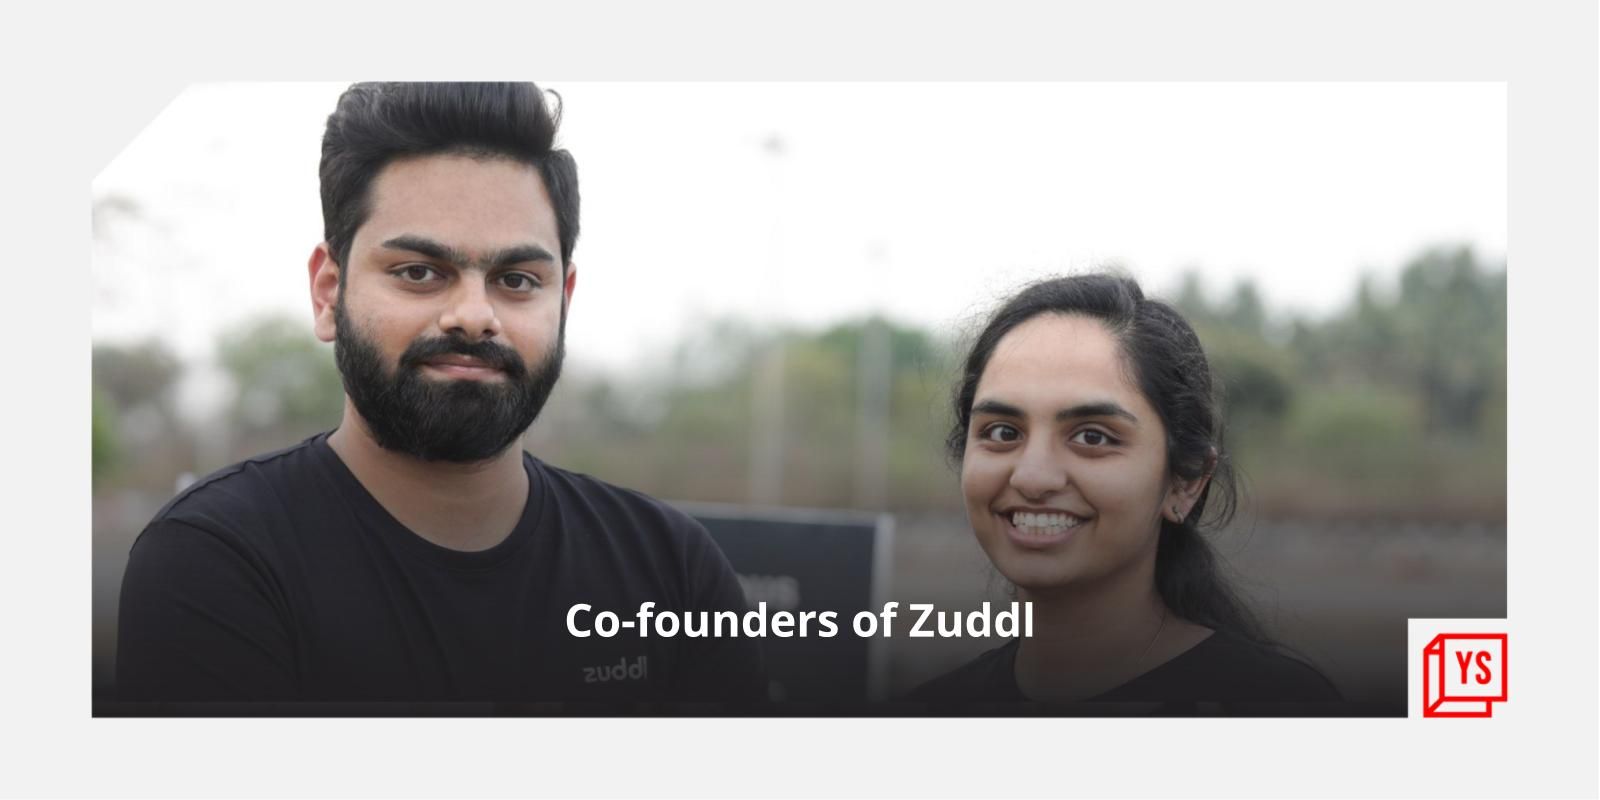 [Funding alert] Zuddl raises $13.35M led by Alpha Wave, Qualcomm Ventures